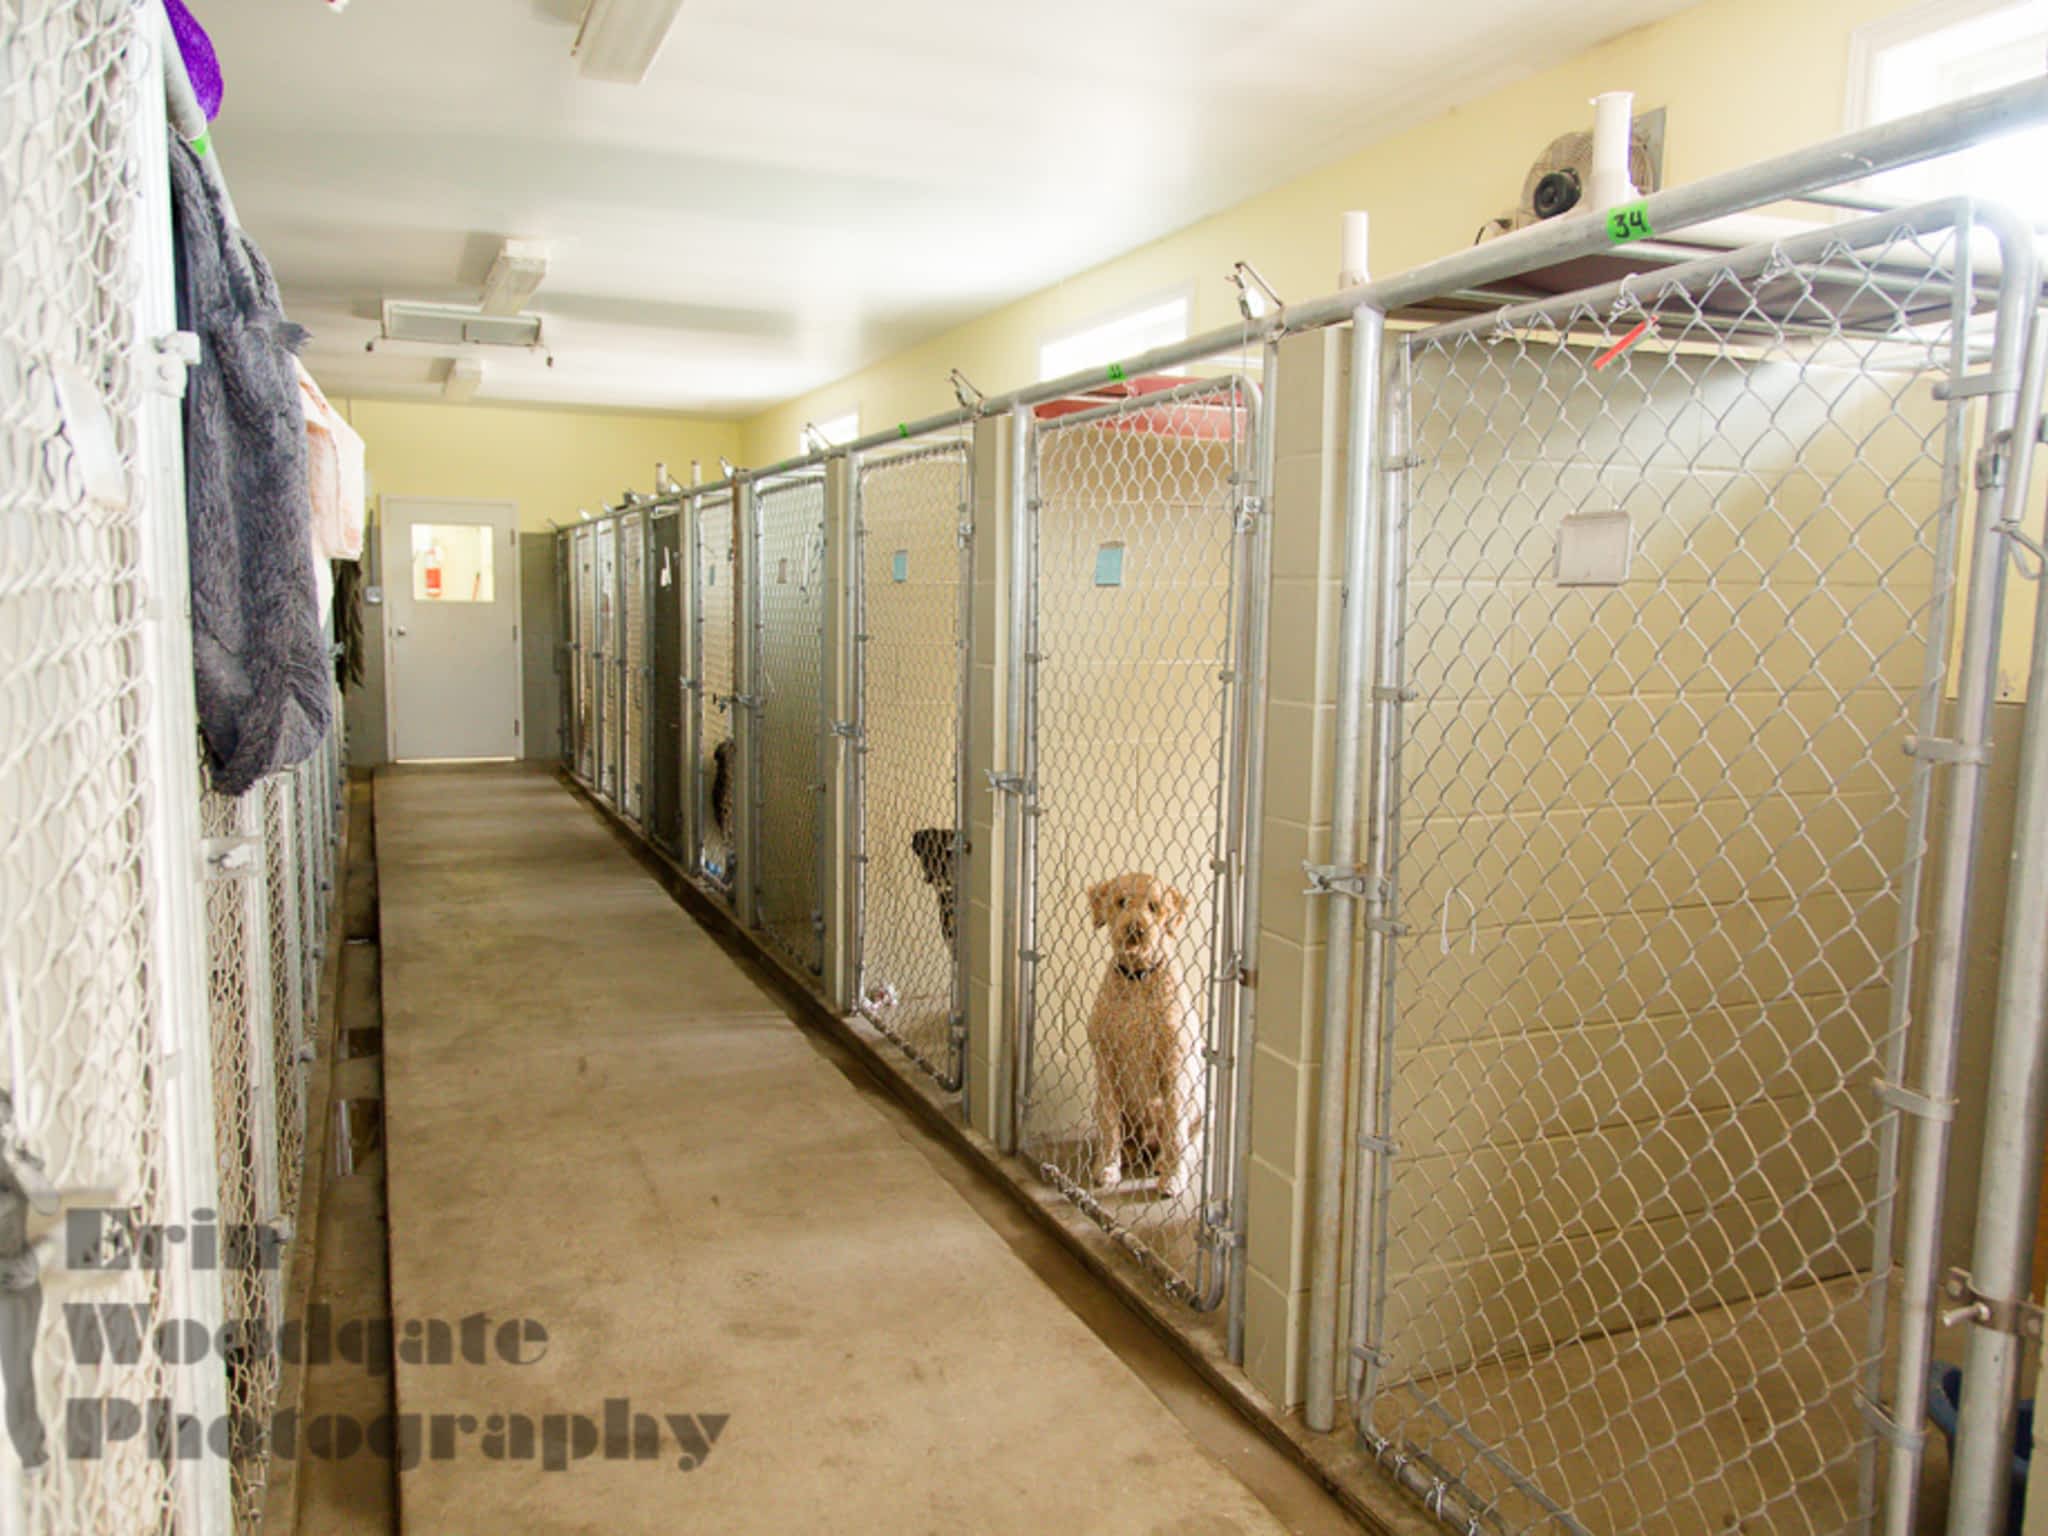 photo Animal Care Centre-Lobo